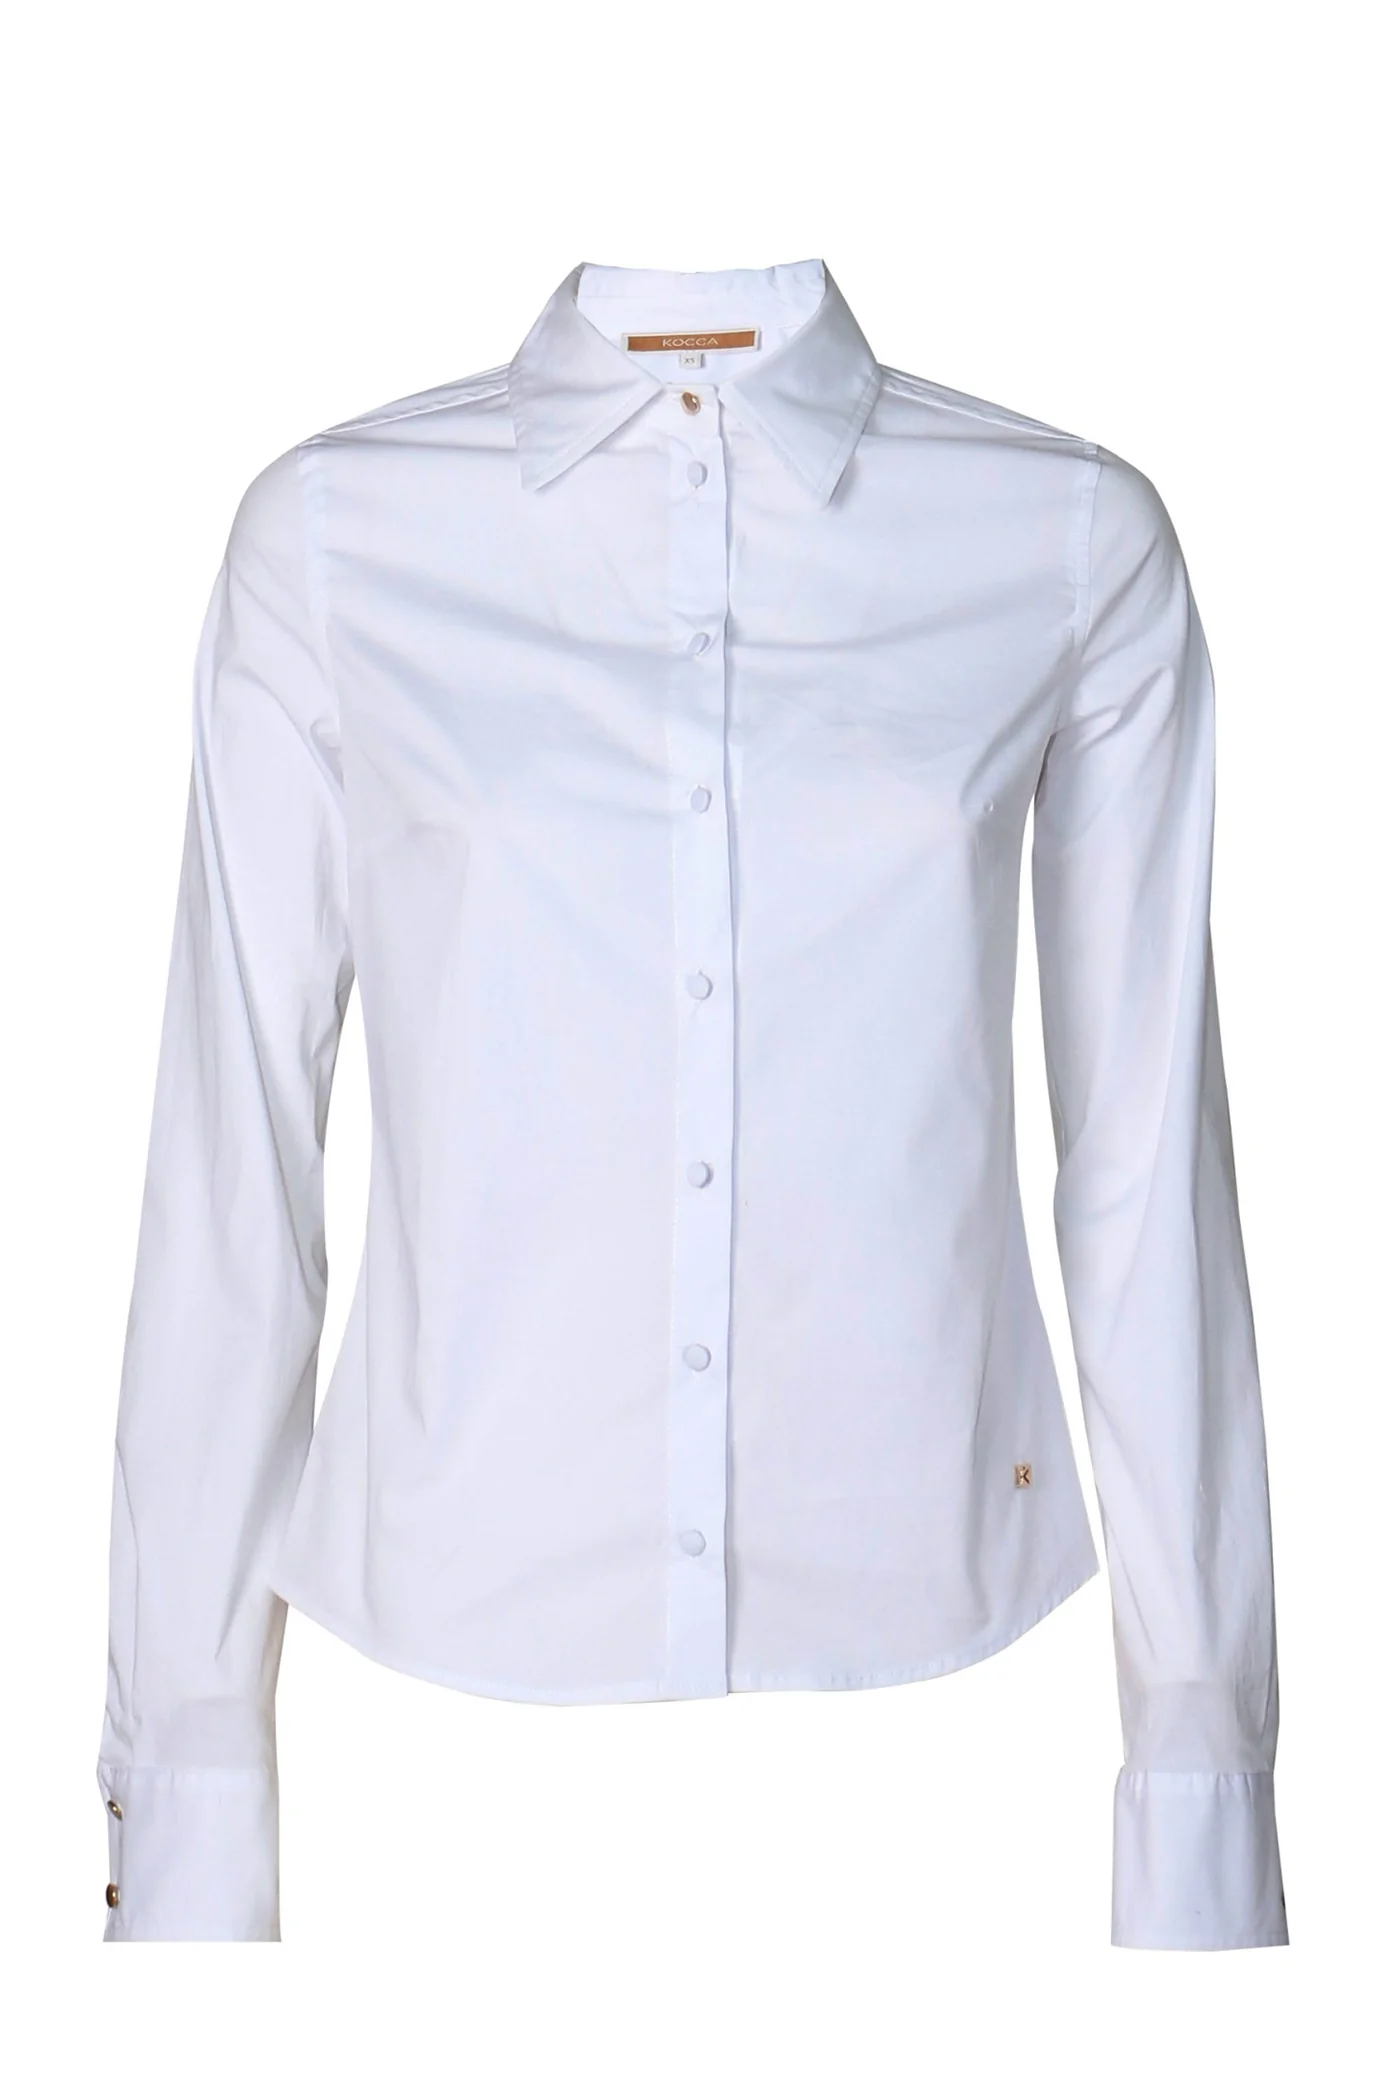 KOCCA camisa color blanco - 4